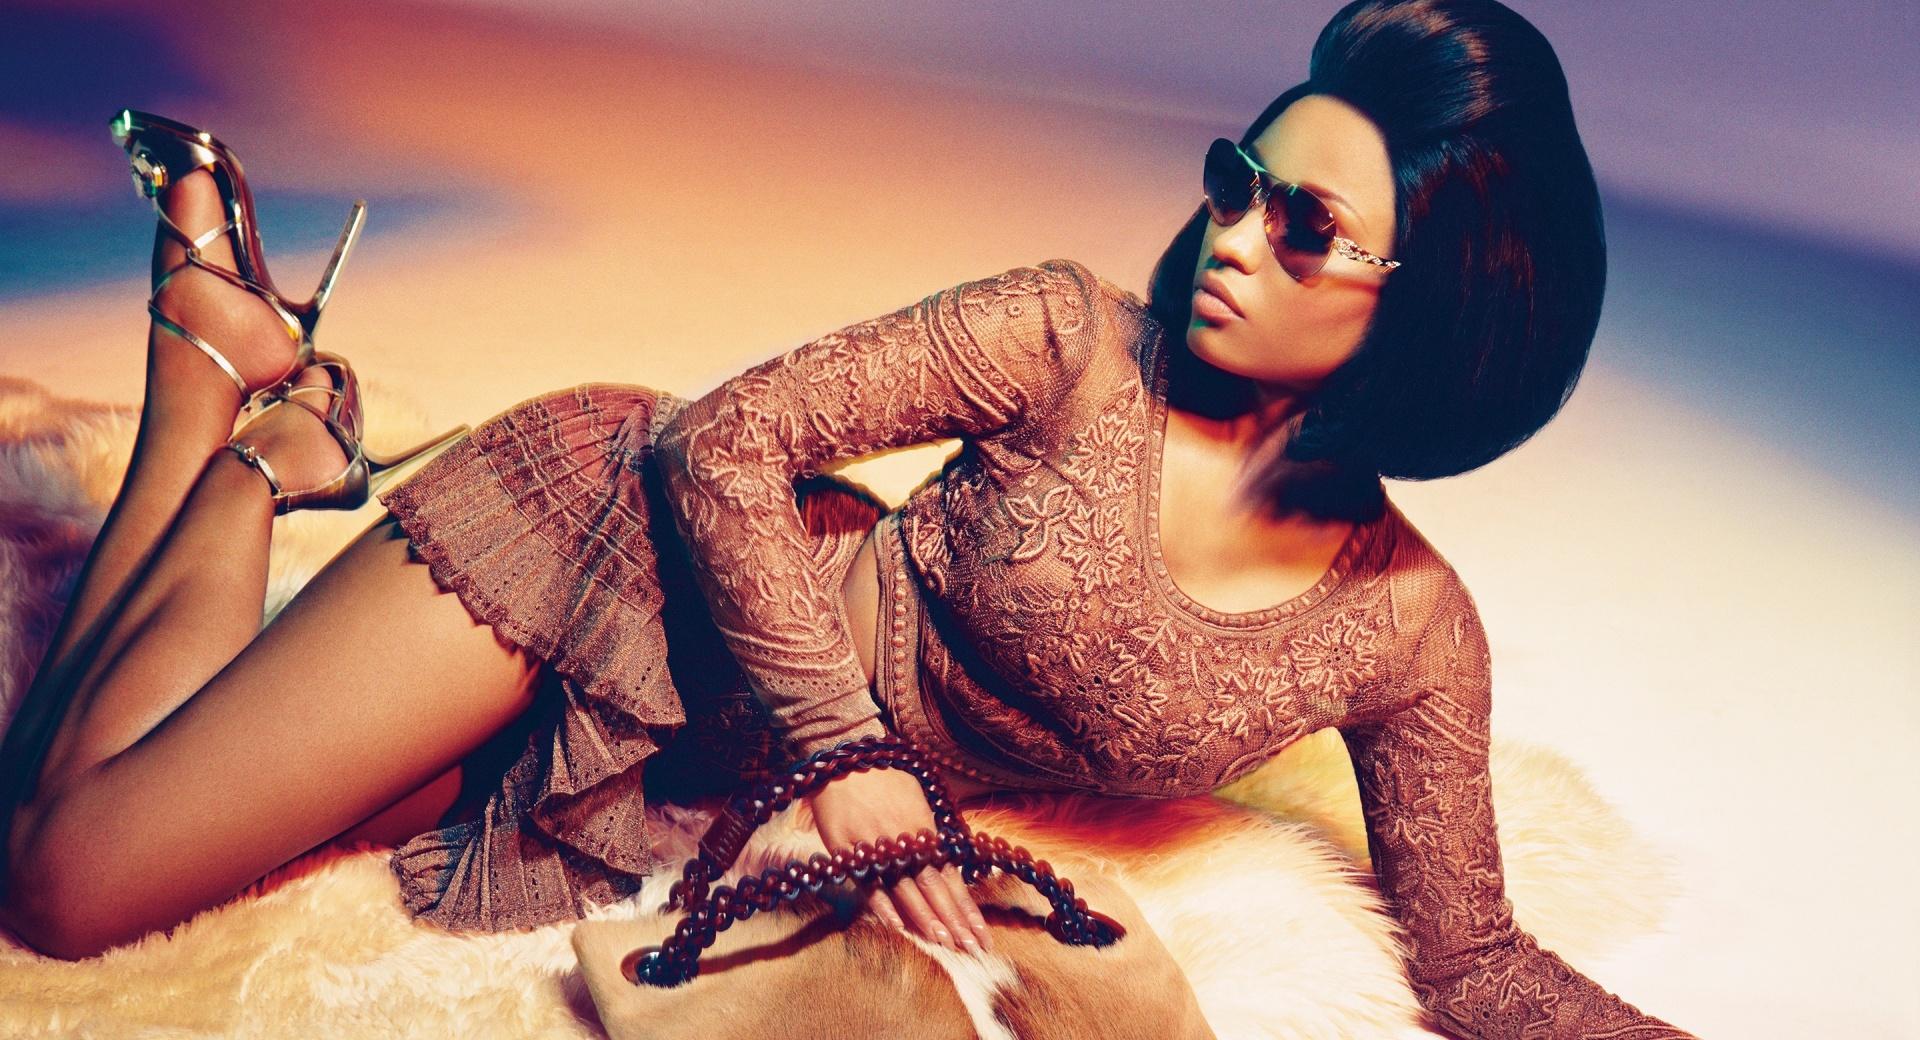 Nicki Minaj Fashion 2015 at 640 x 1136 iPhone 5 size wallpapers HD quality